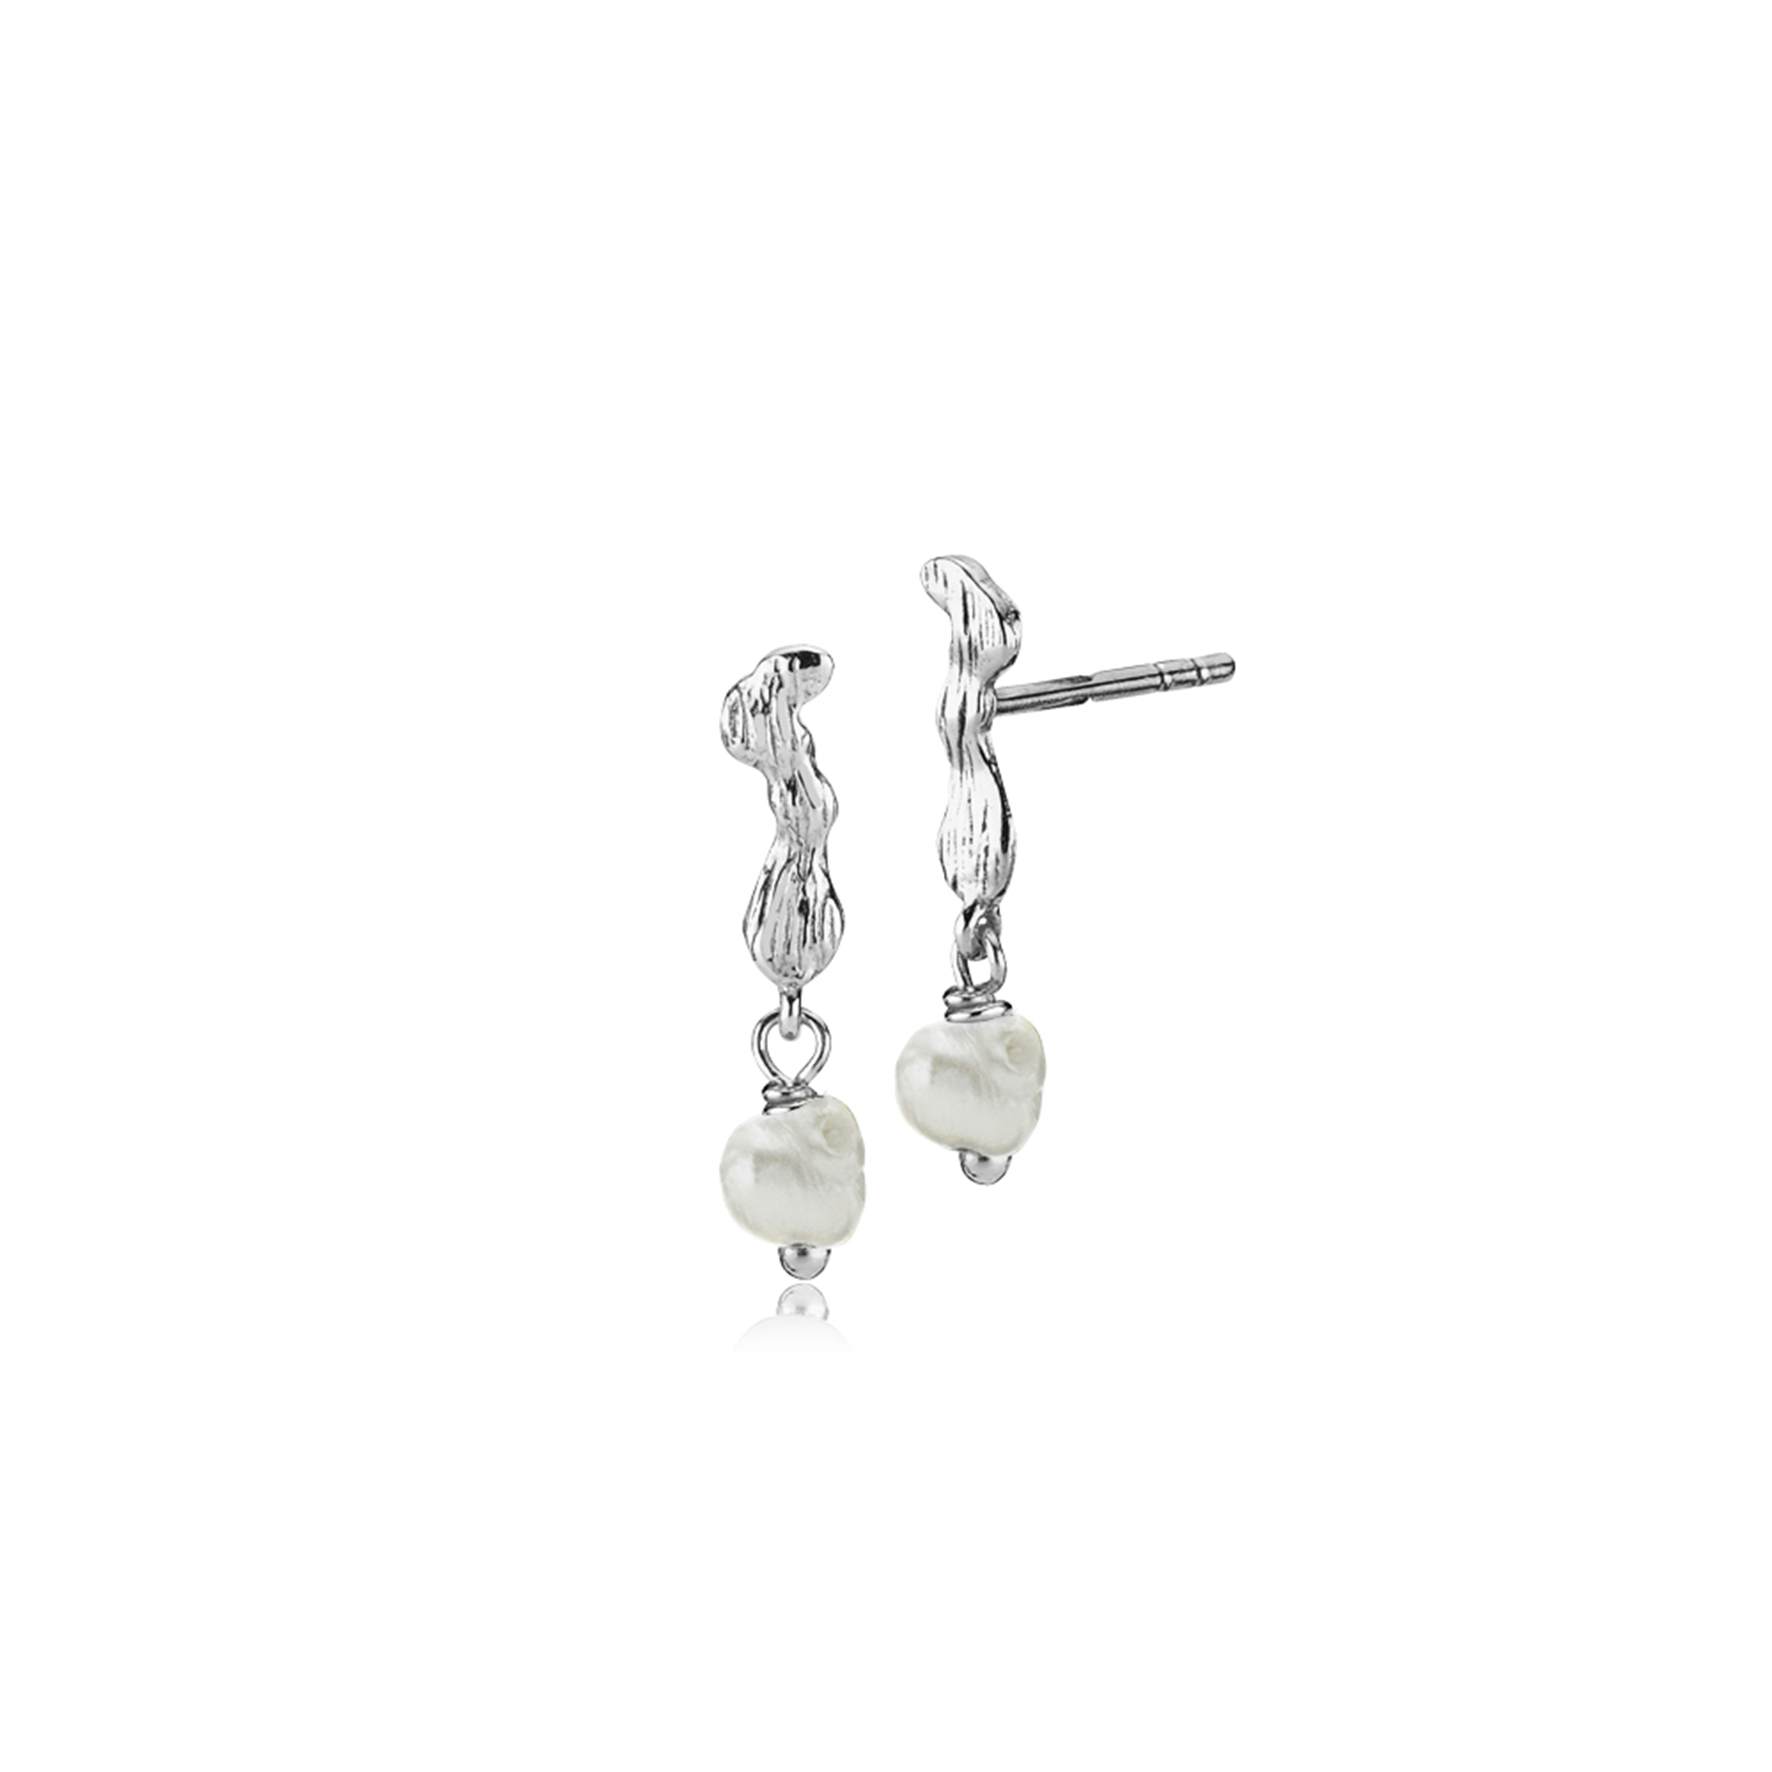 Lærke Bentsen By Sistie Earsticks With Pearls fra Sistie i Sølv Sterling 925|Freshwater Pearl